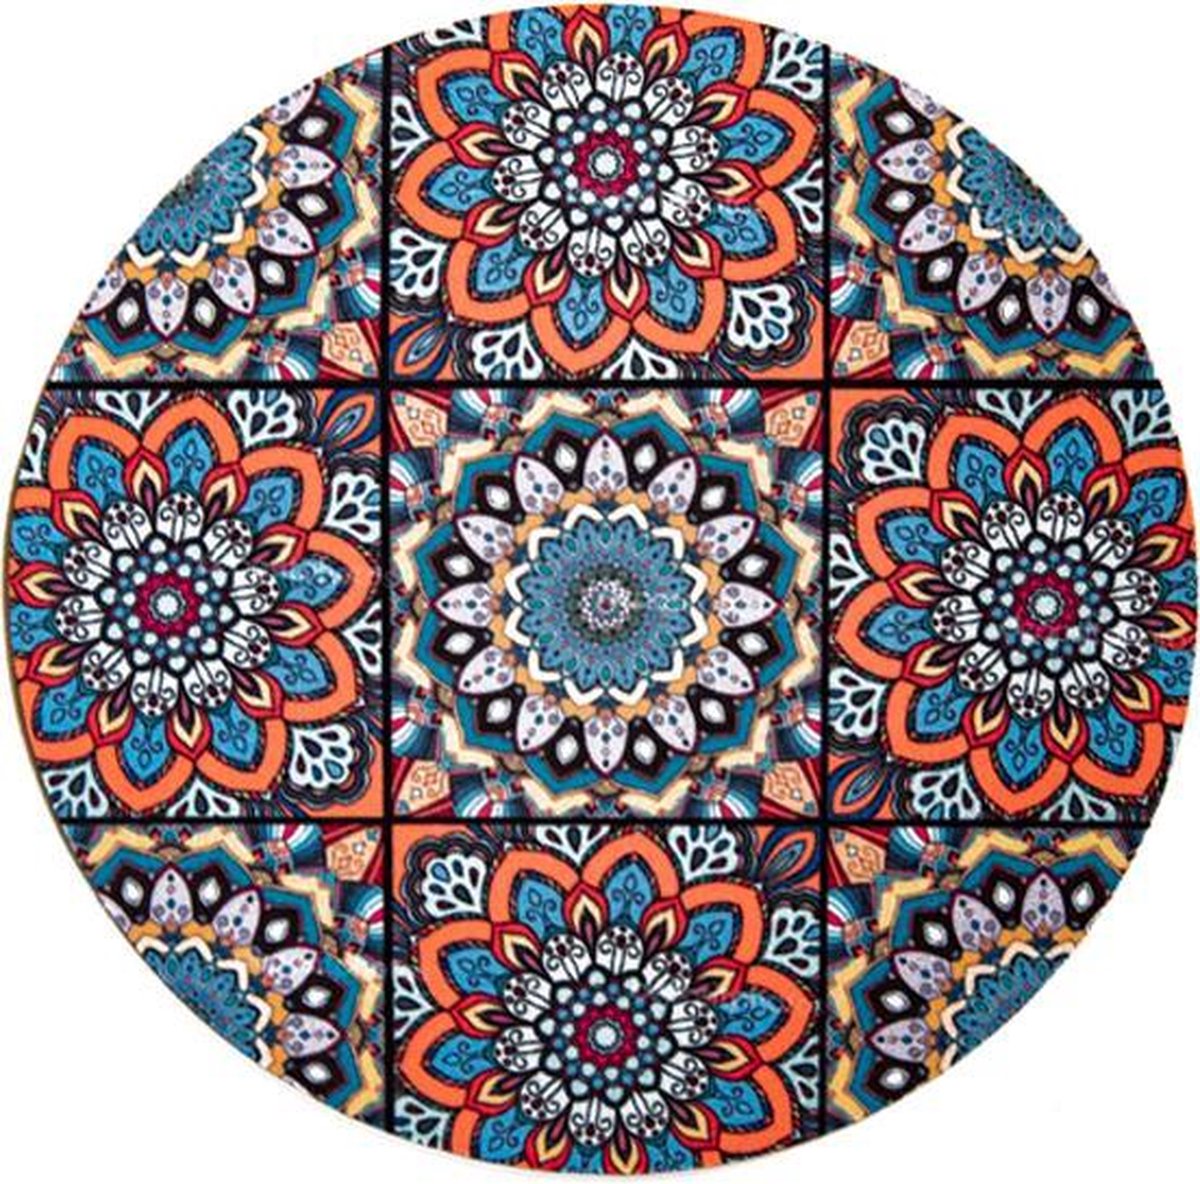 Computer - muismat moroccan tiles - rond - rubber - buigbaar - anti-slip - mousepad